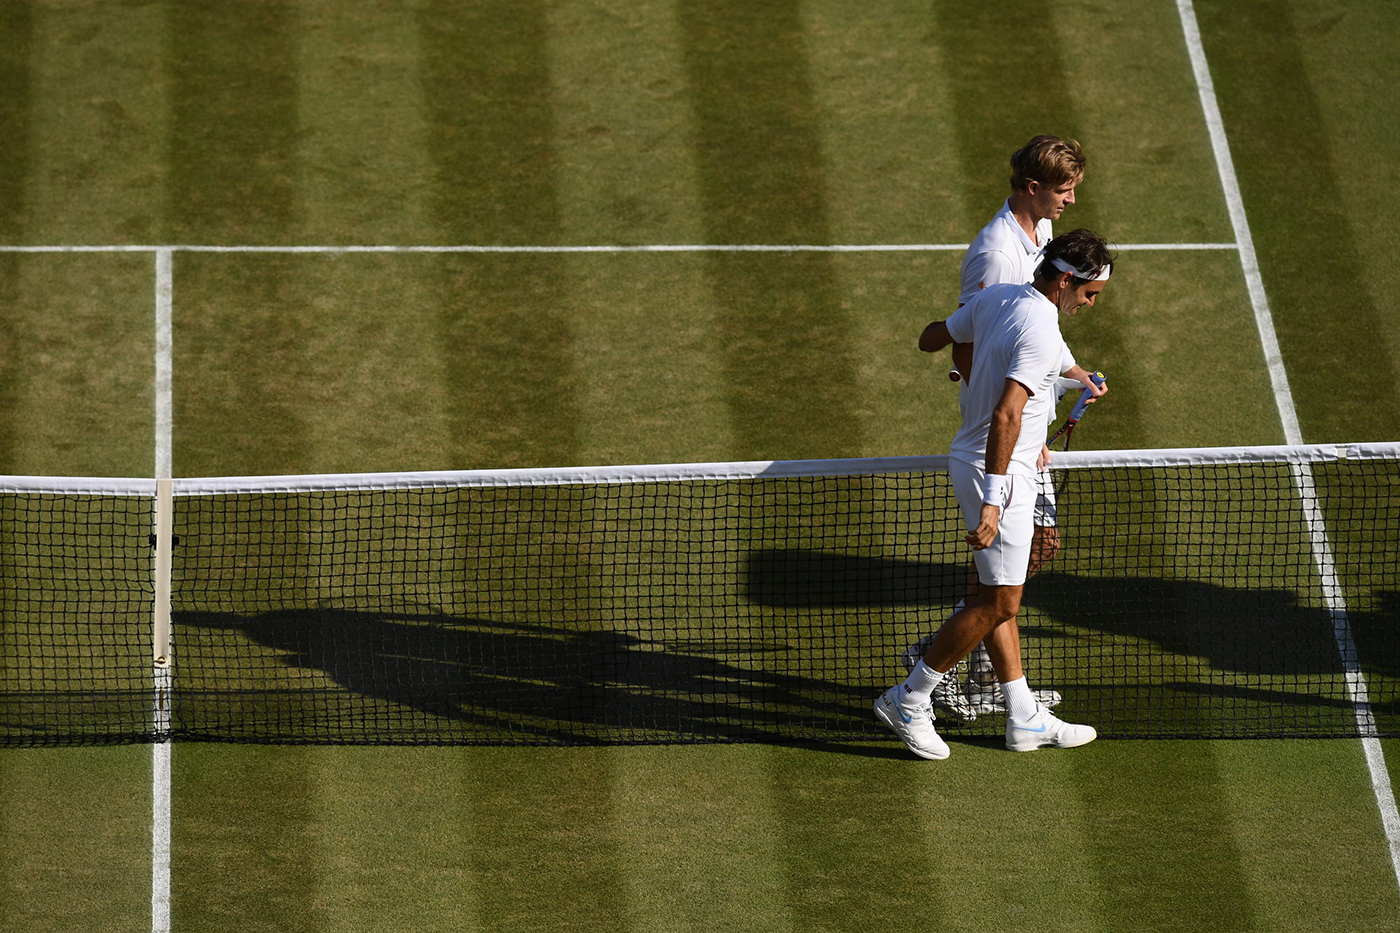 Anderson Upsets Federer in Marathon Wimbledon Quarterfinal